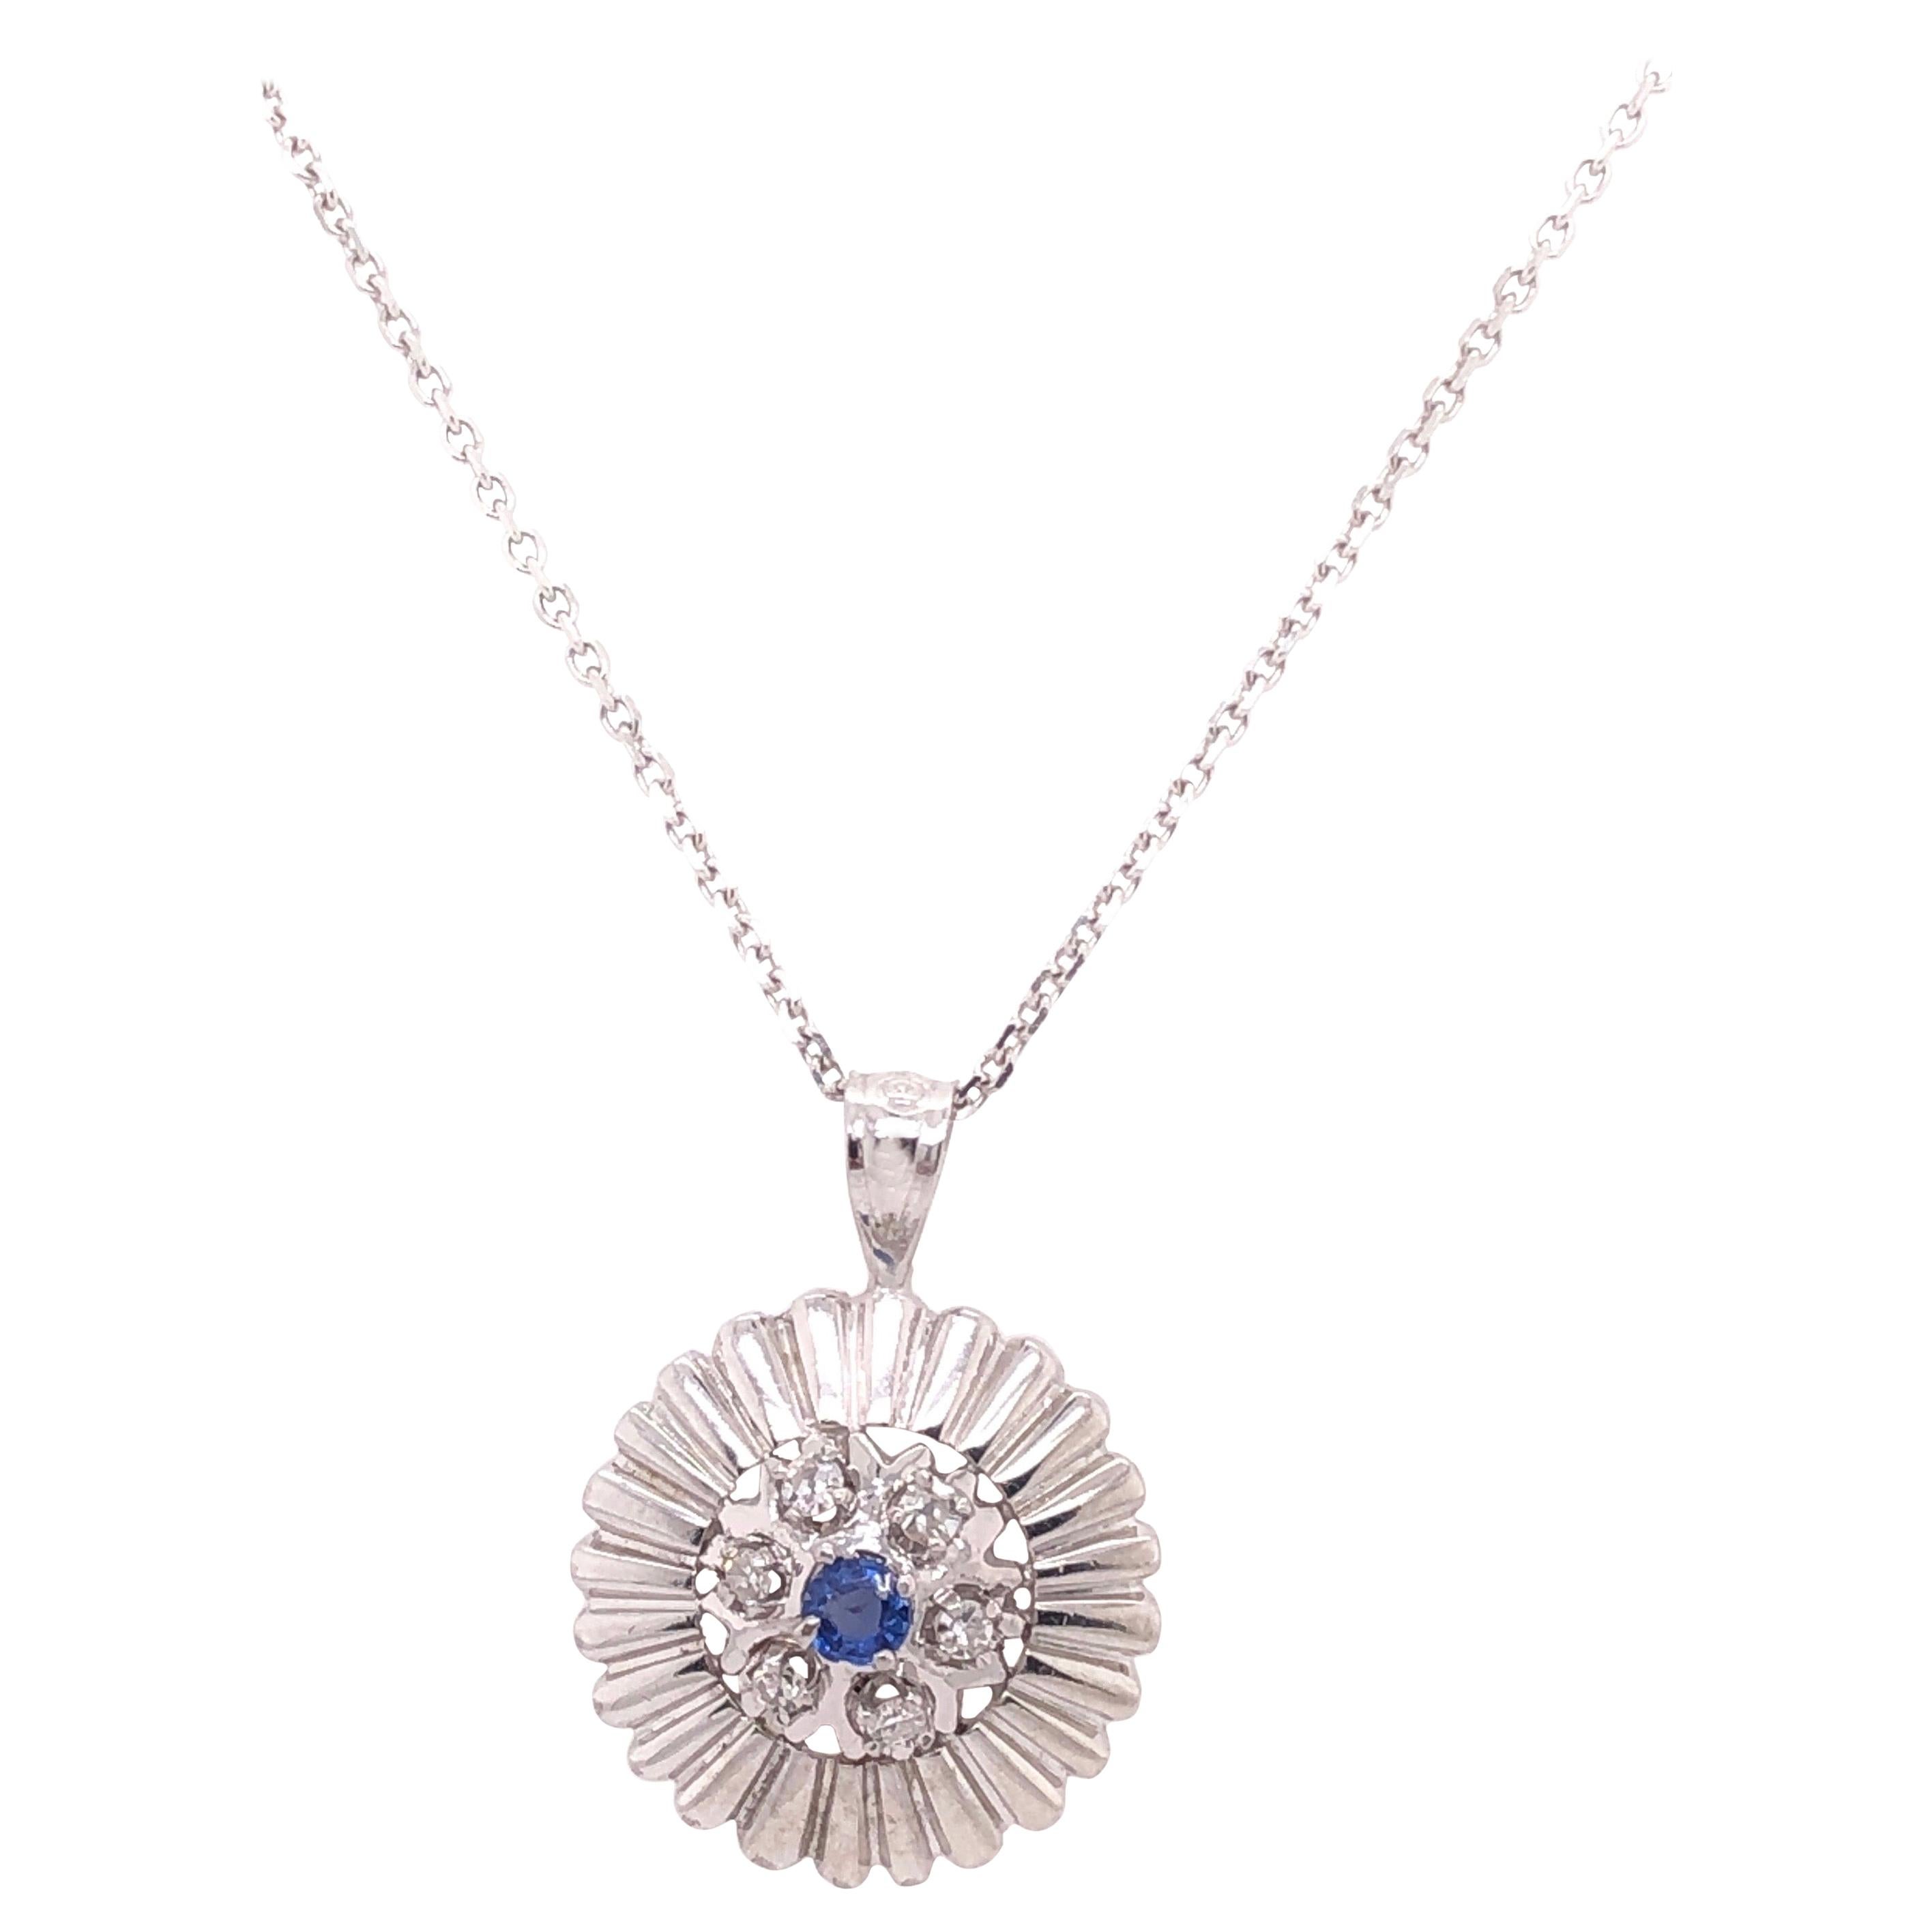 14 Karat White Gold Sapphire with Diamond Accents Pendant Necklace